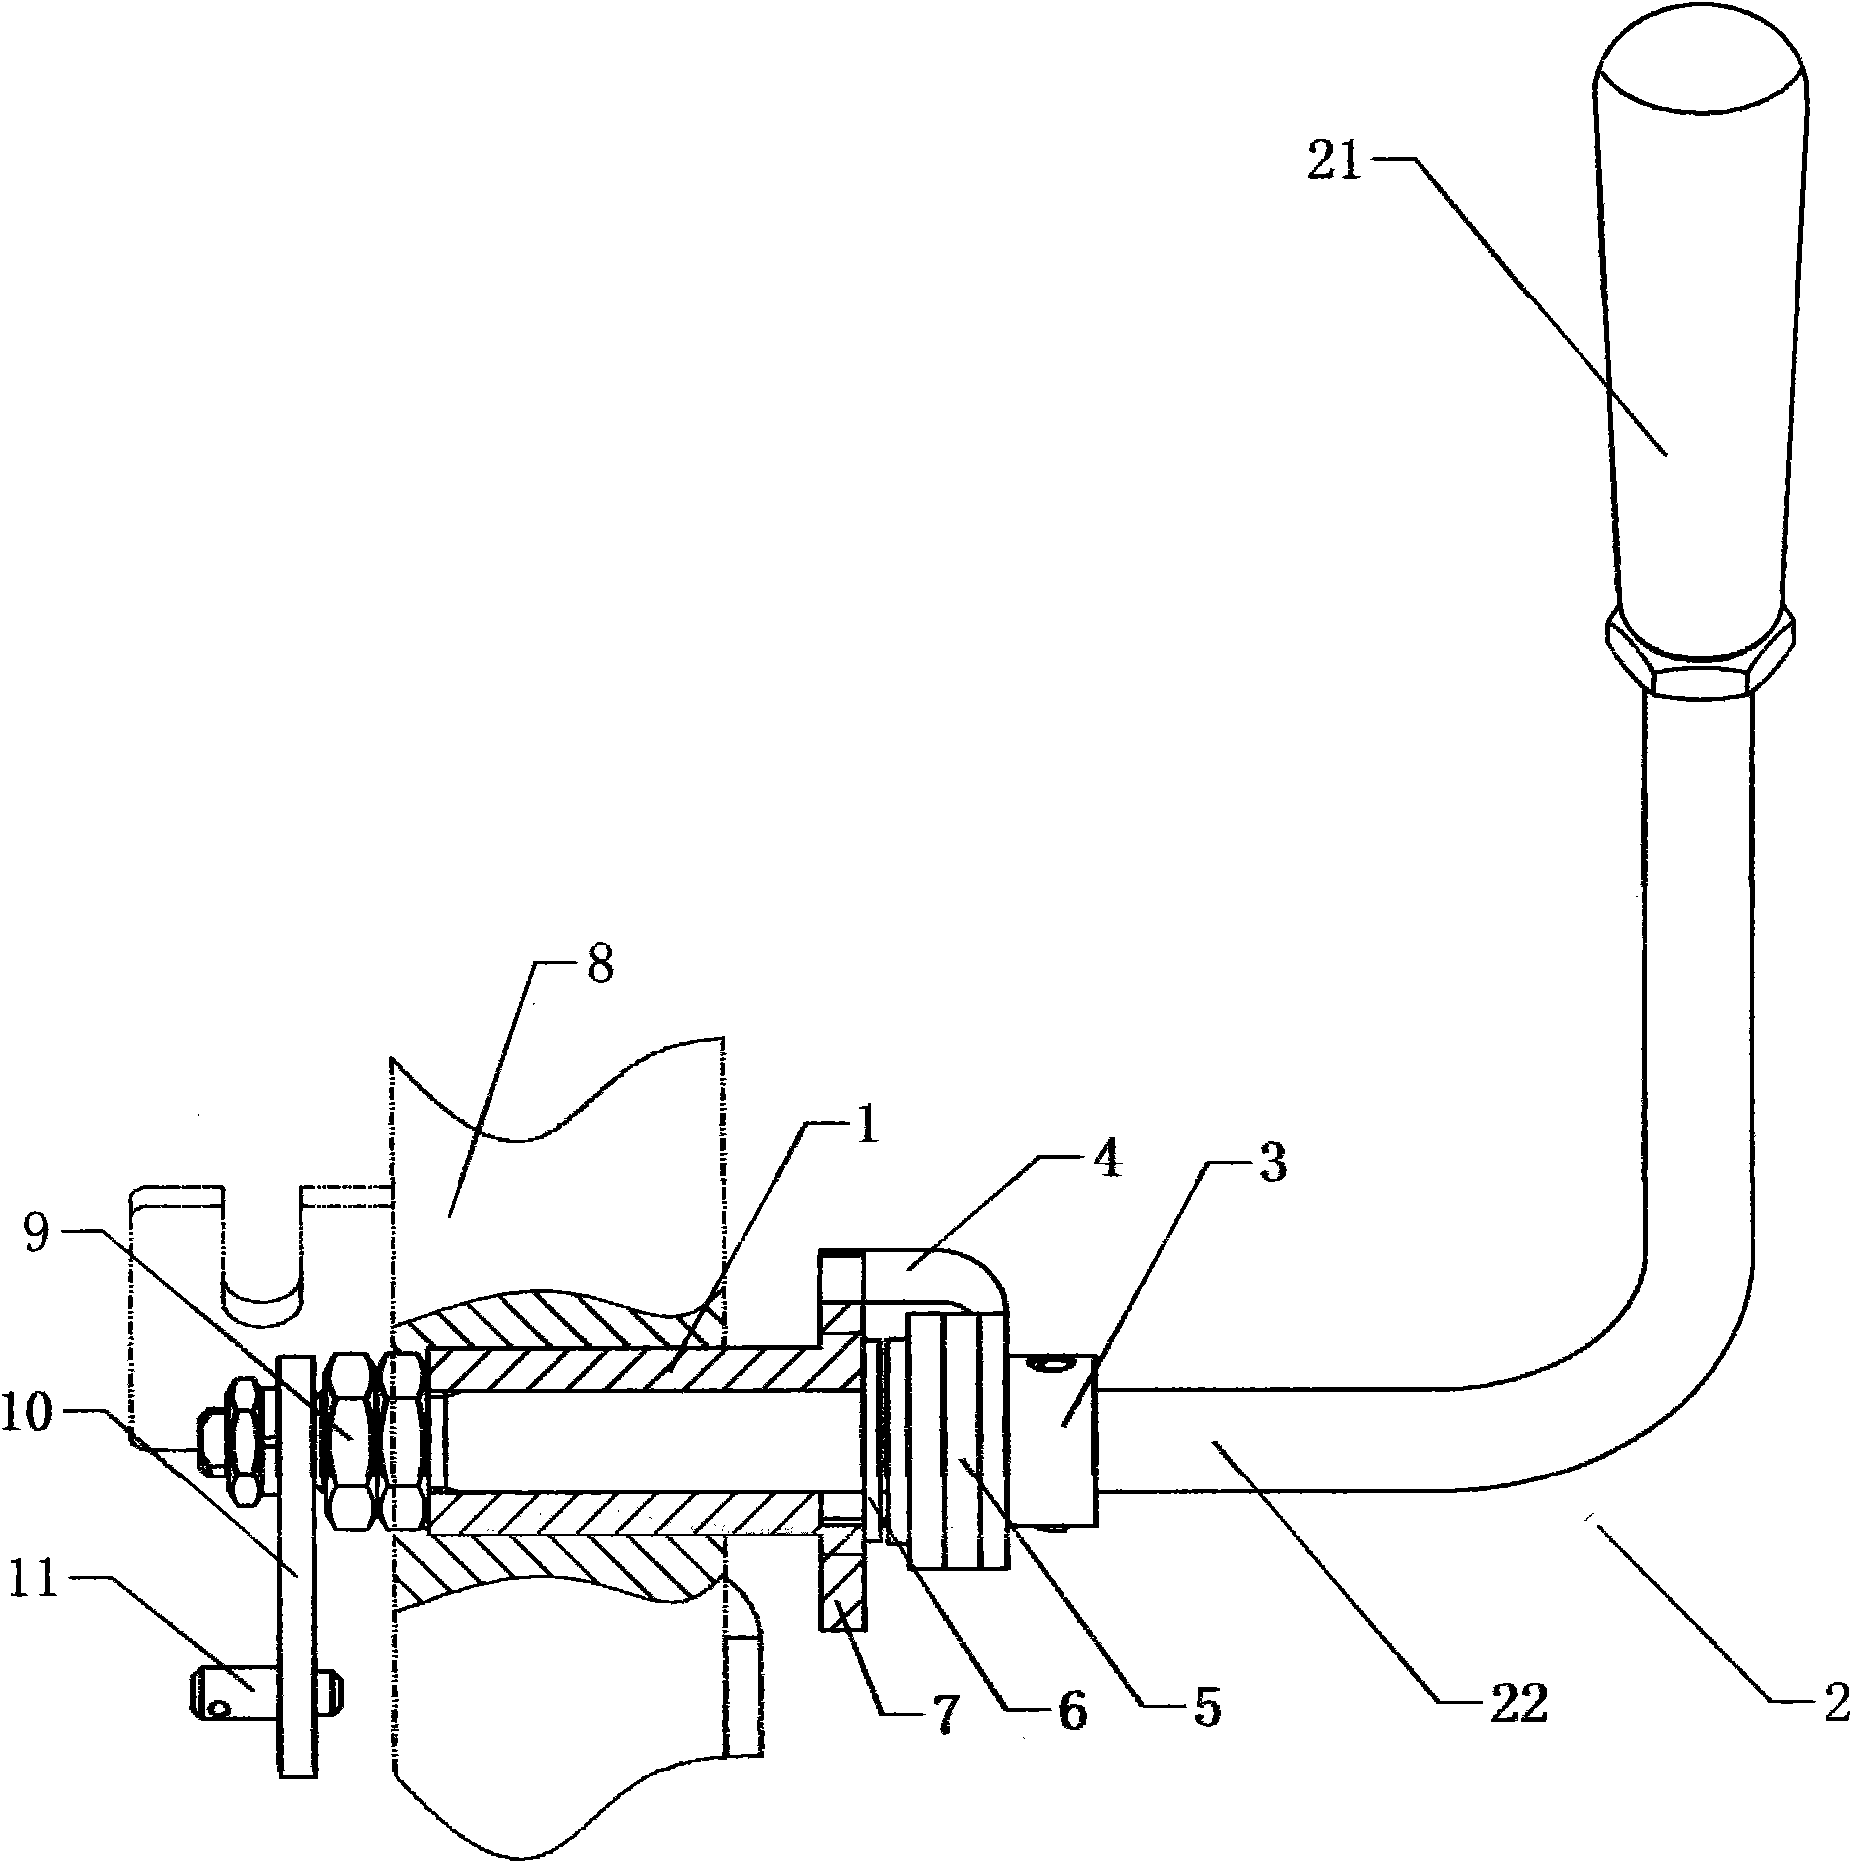 Hand throttle operation mechanism